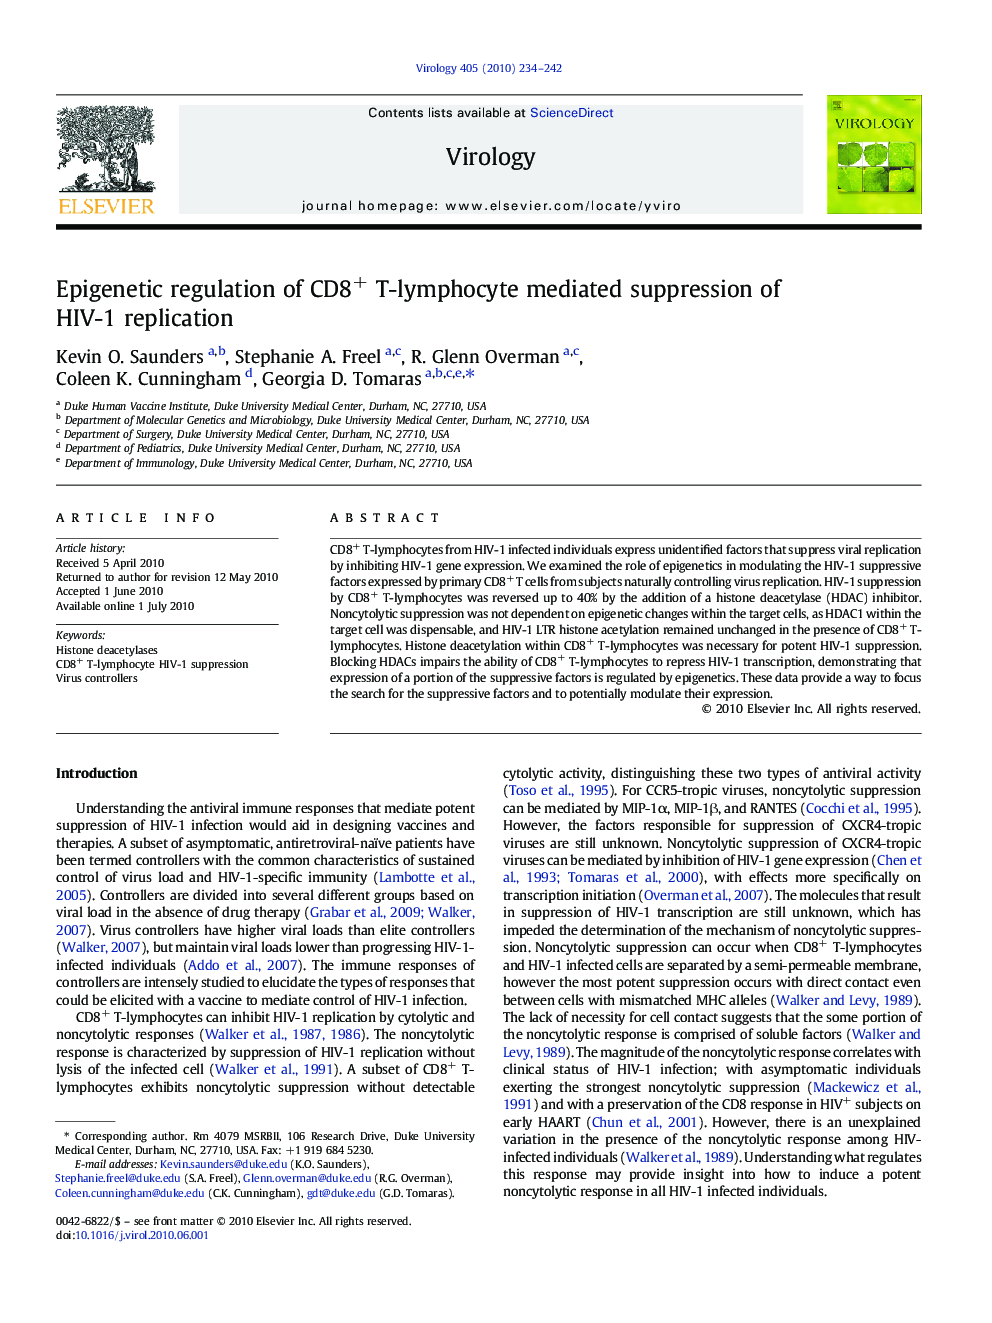 Epigenetic regulation of CD8+ T-lymphocyte mediated suppression of HIV-1 replication